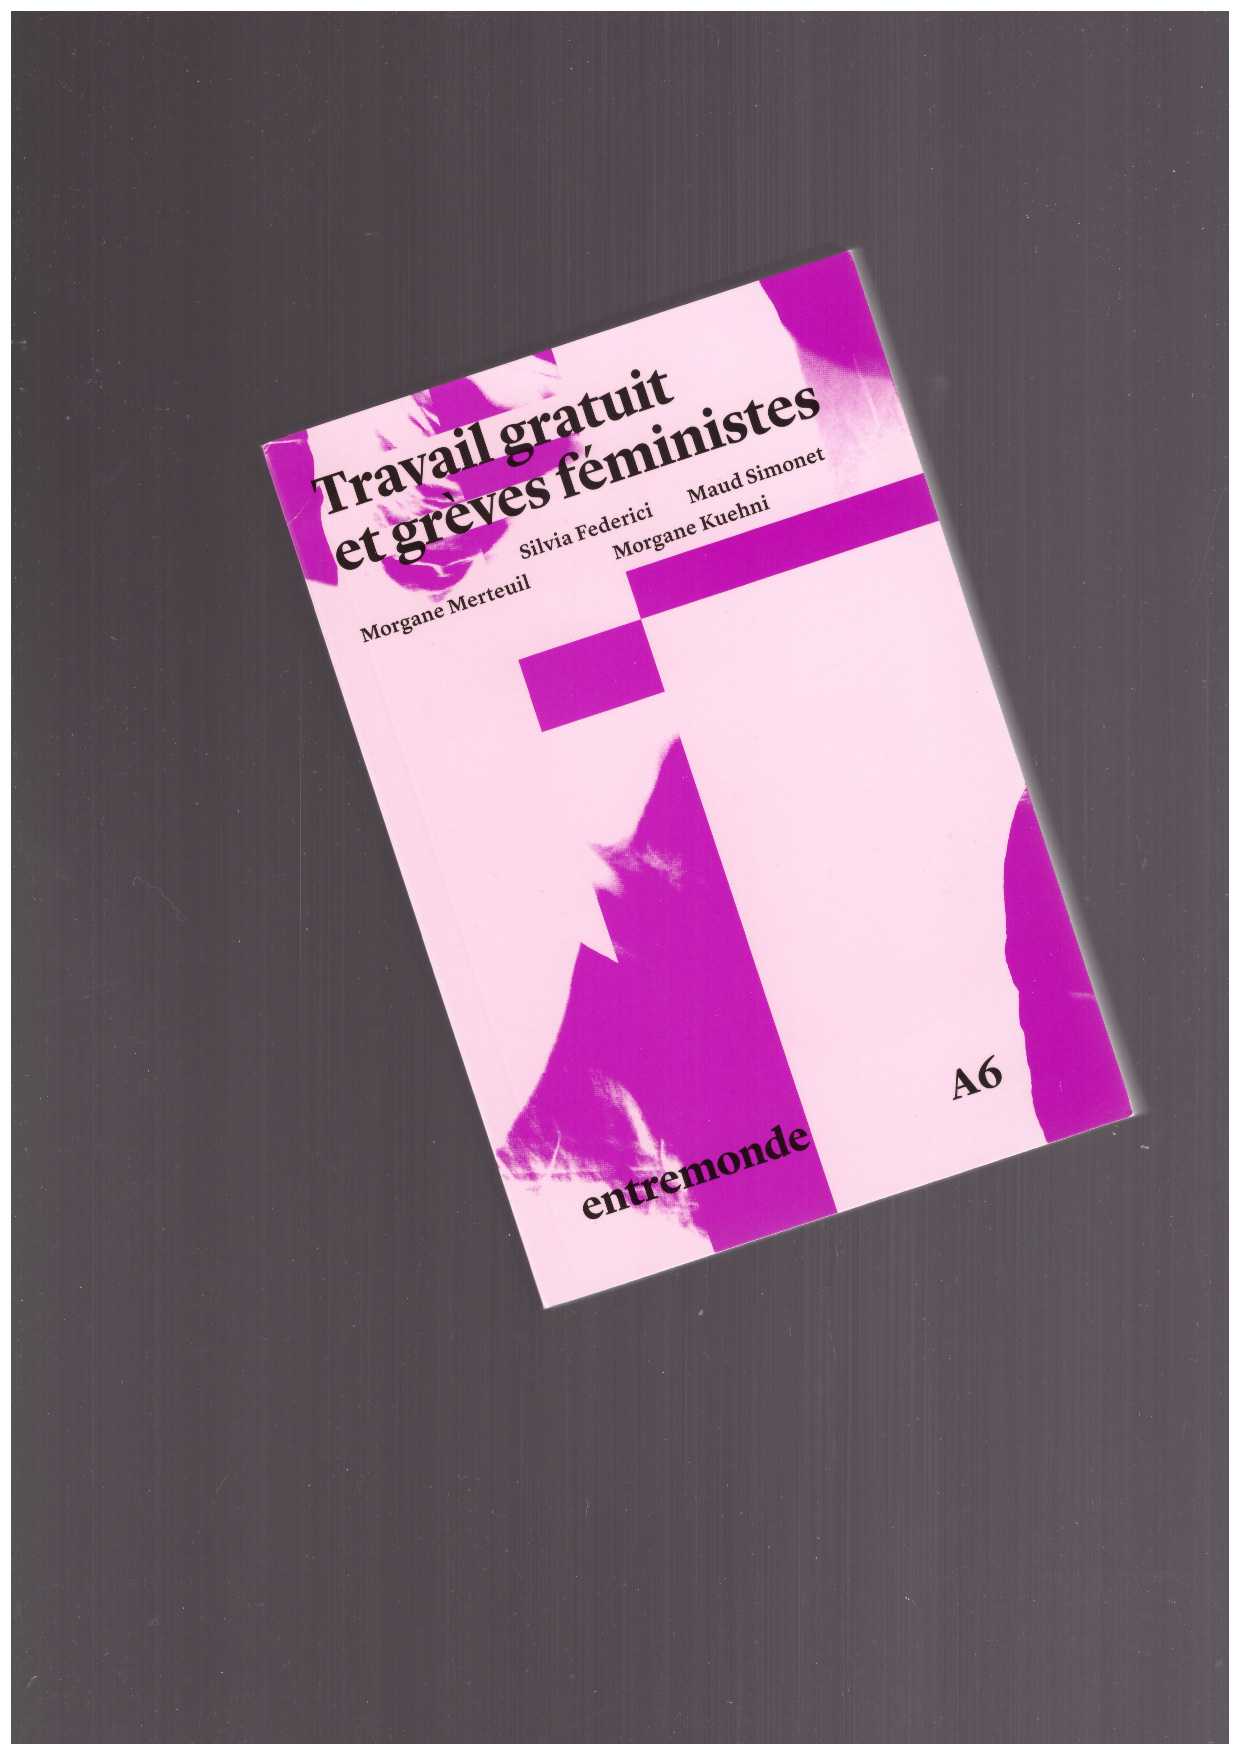 FEDERICI, Silvia; MERTEUIL, Morgane; SIMONET, Maud; KUEHNI, Morgane (eds.) - Travail gratuit et grèves féministes